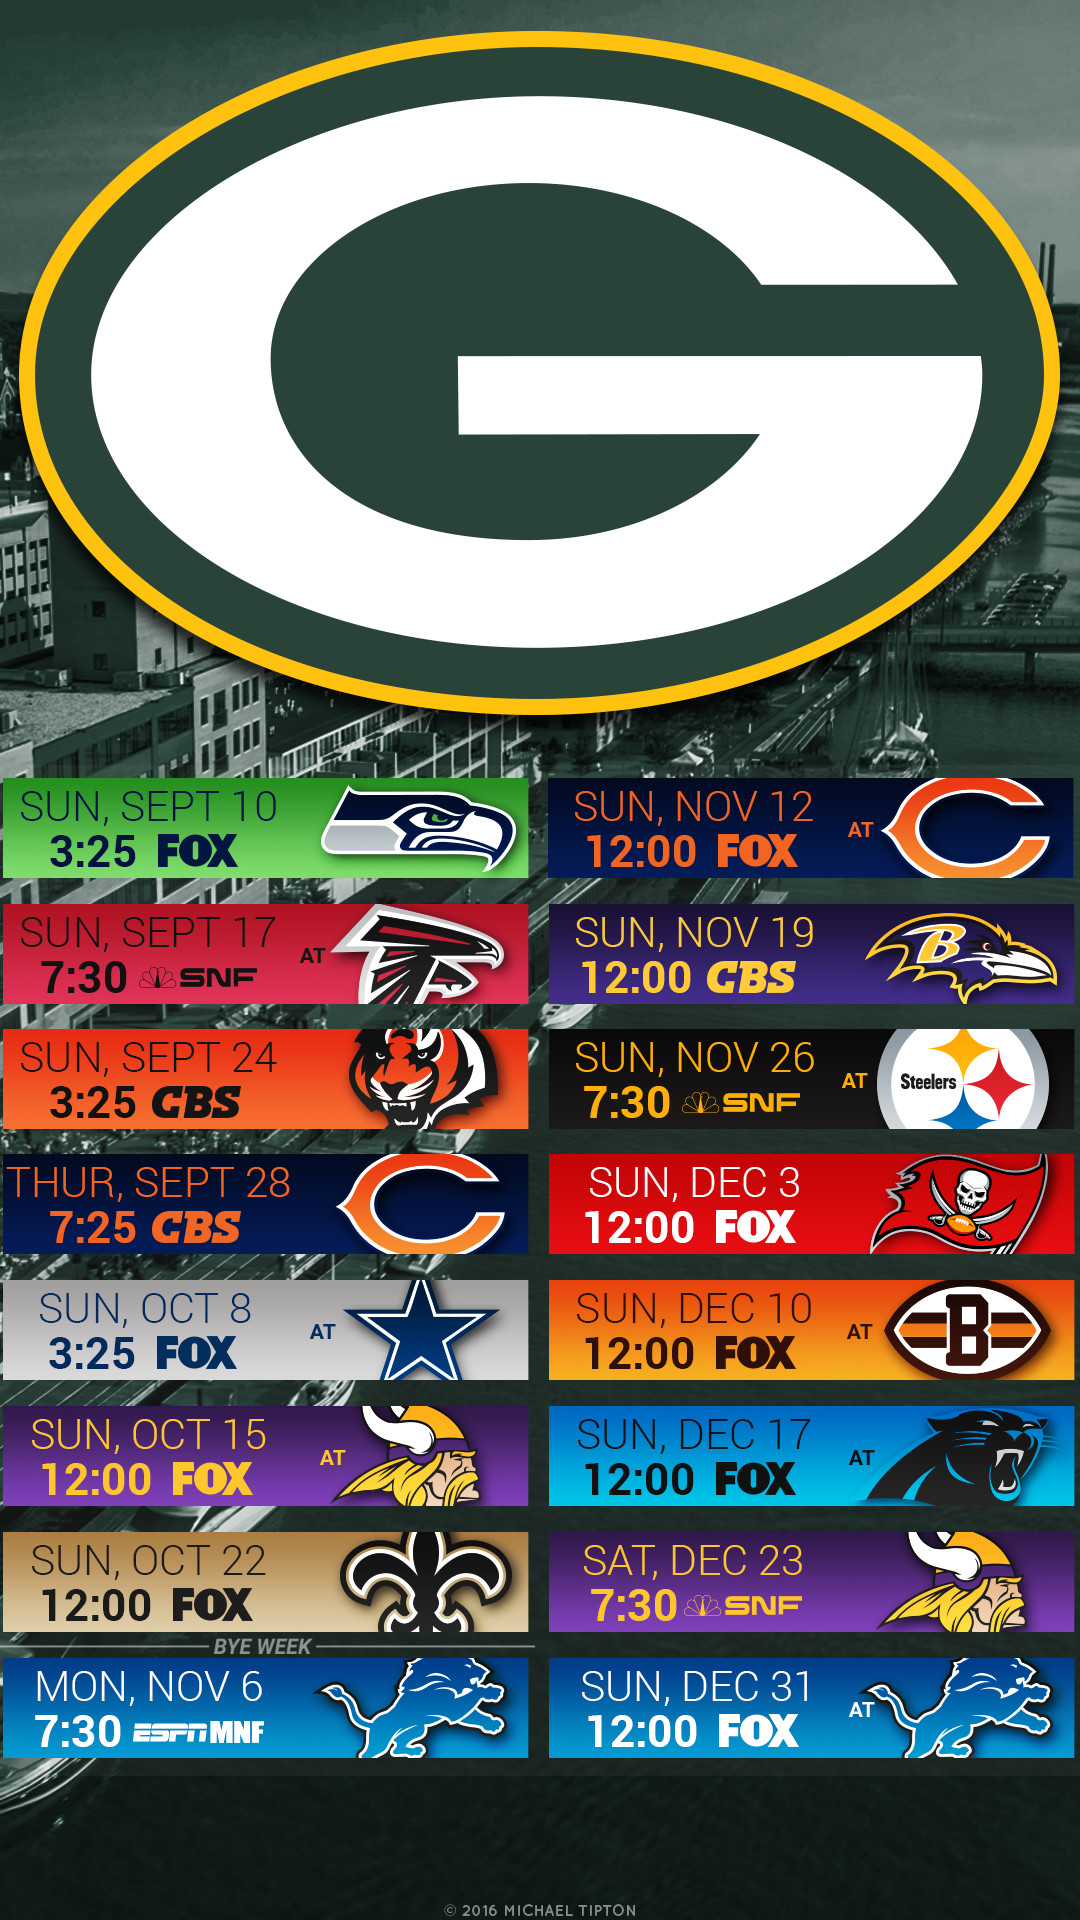 1080x1920 Green Bay Packers 2017 schedule turf logo wallpaper free iphone 5, 6, 7, ...